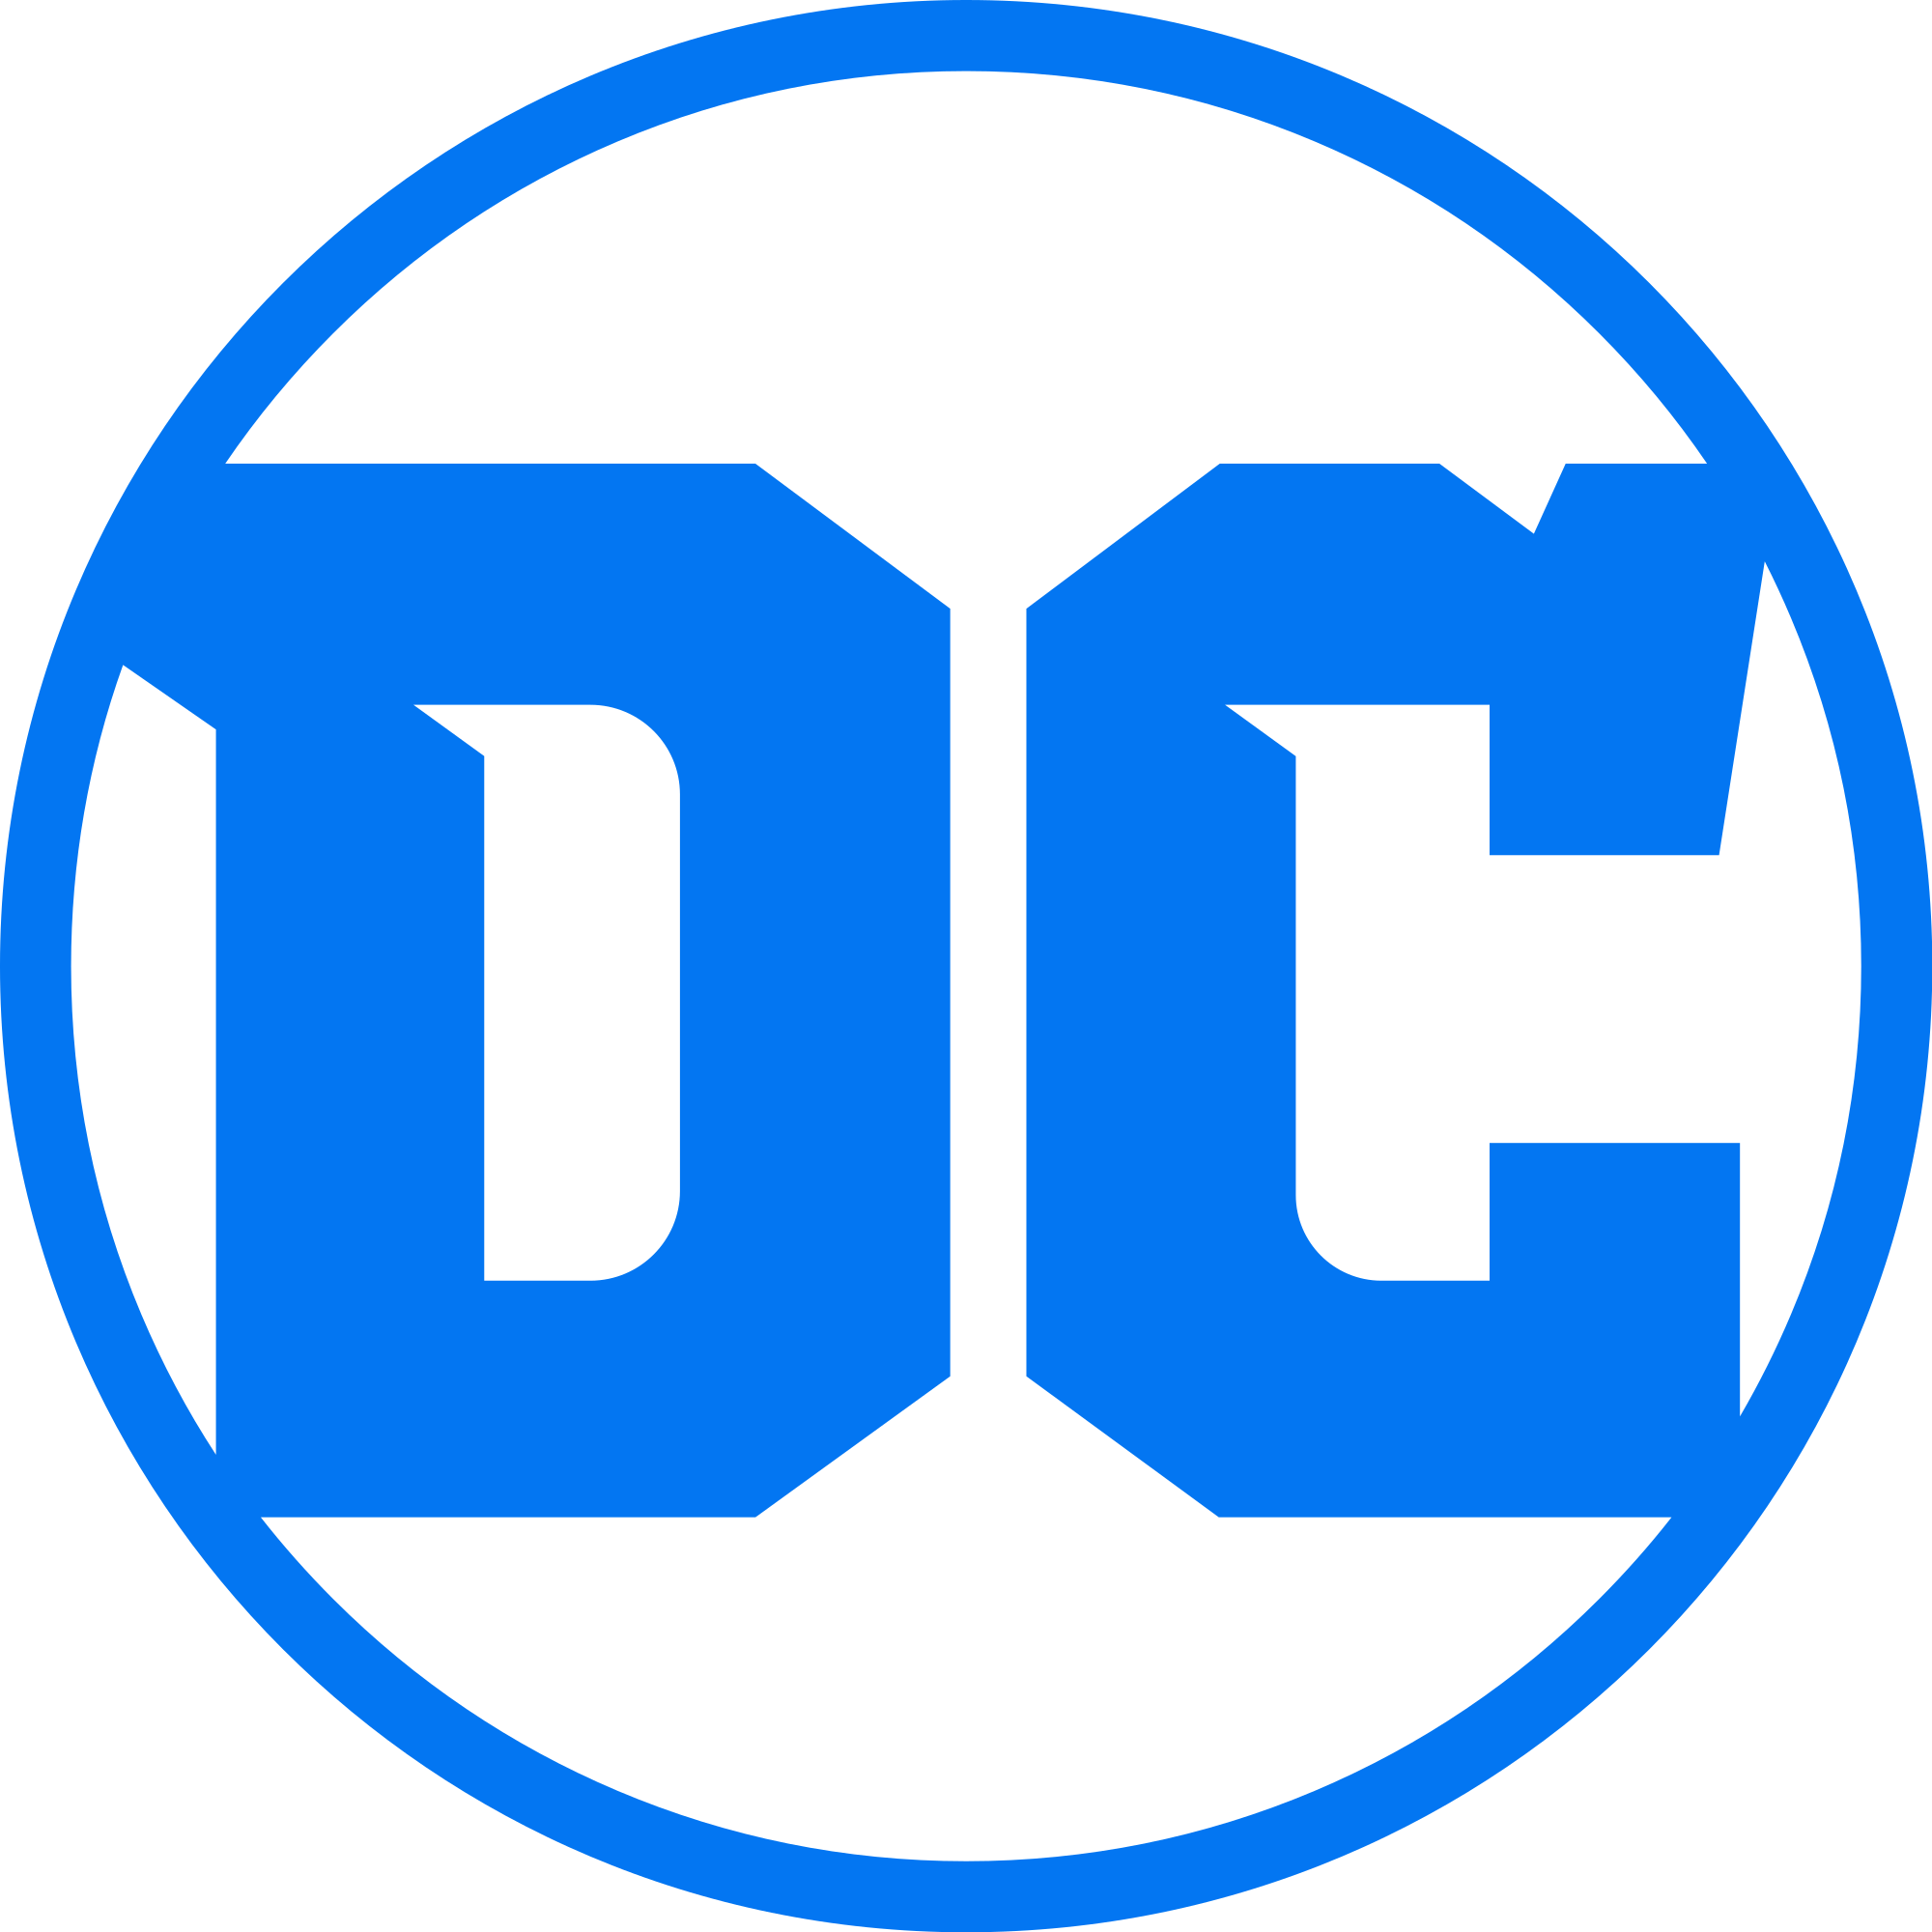 DC Comics - Coinz Comics